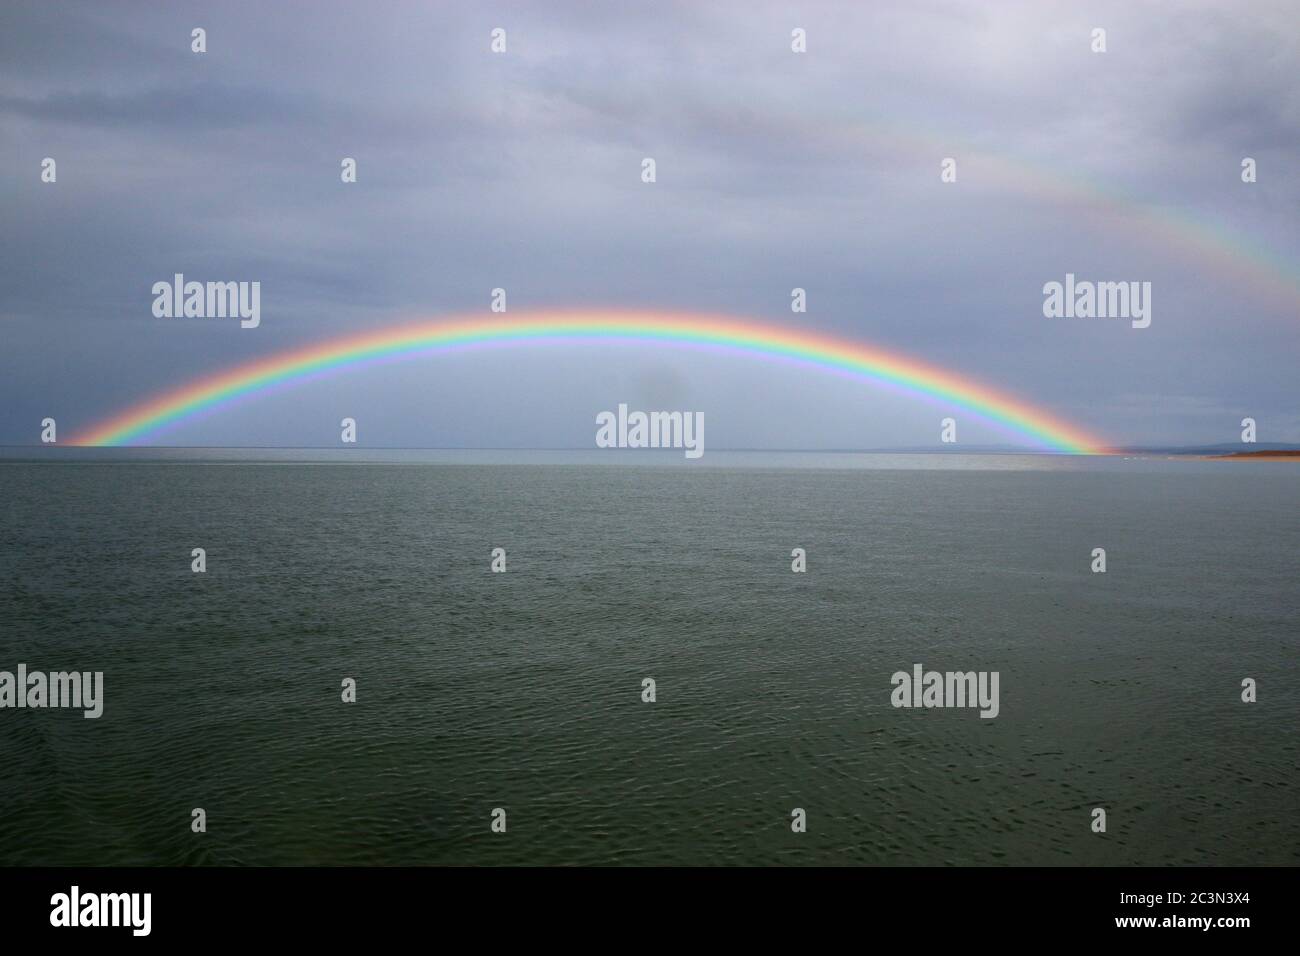 Full rainbow over the sea Stock Photo - Alamy